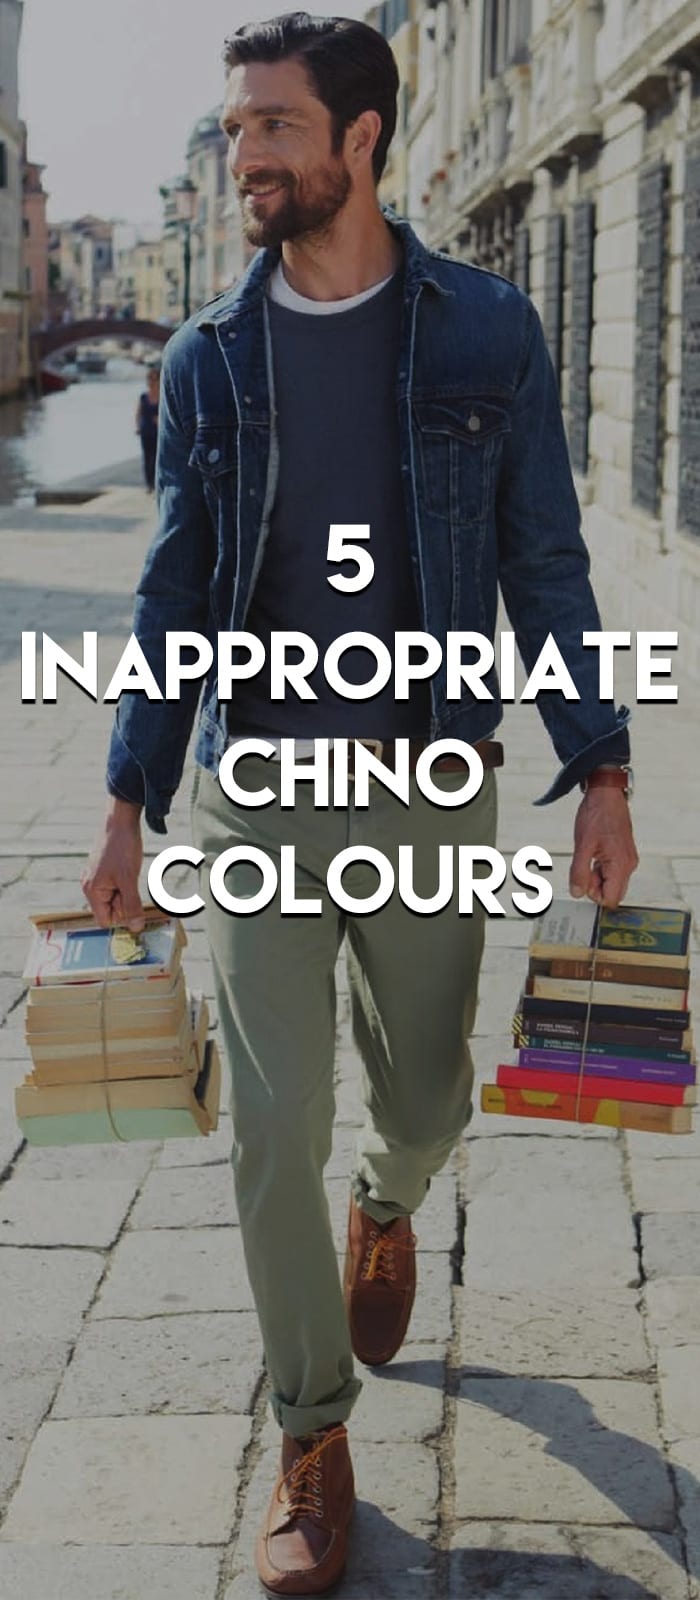 Inappropriate Chino Colours